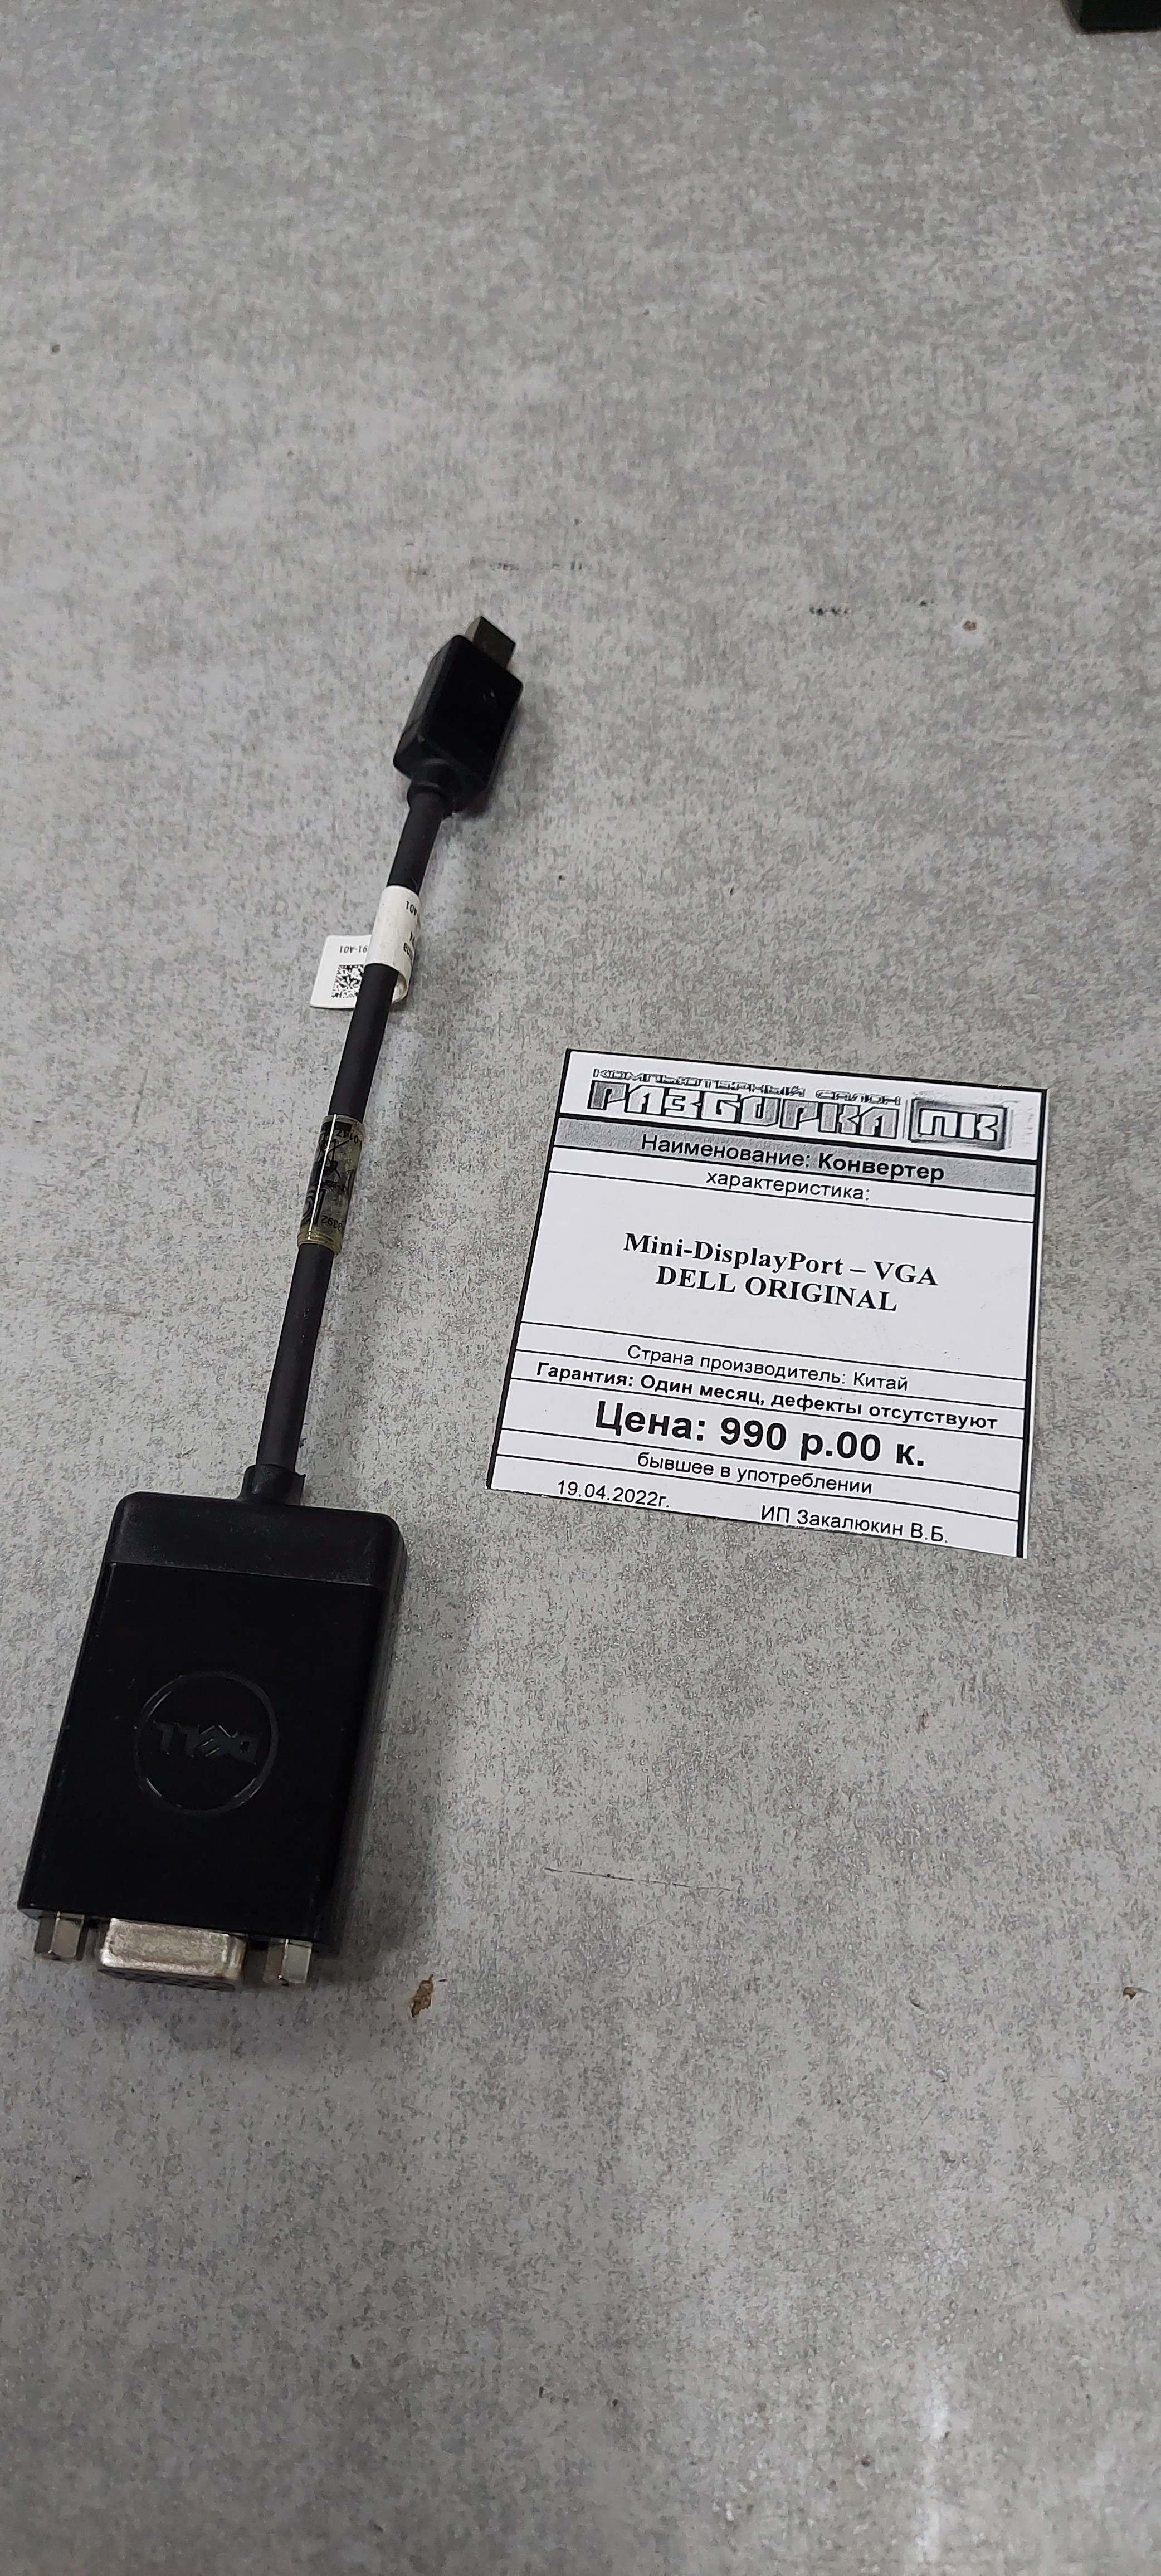 Конвертер Mini-DisplayPort – VGA DELL ORIGINAL